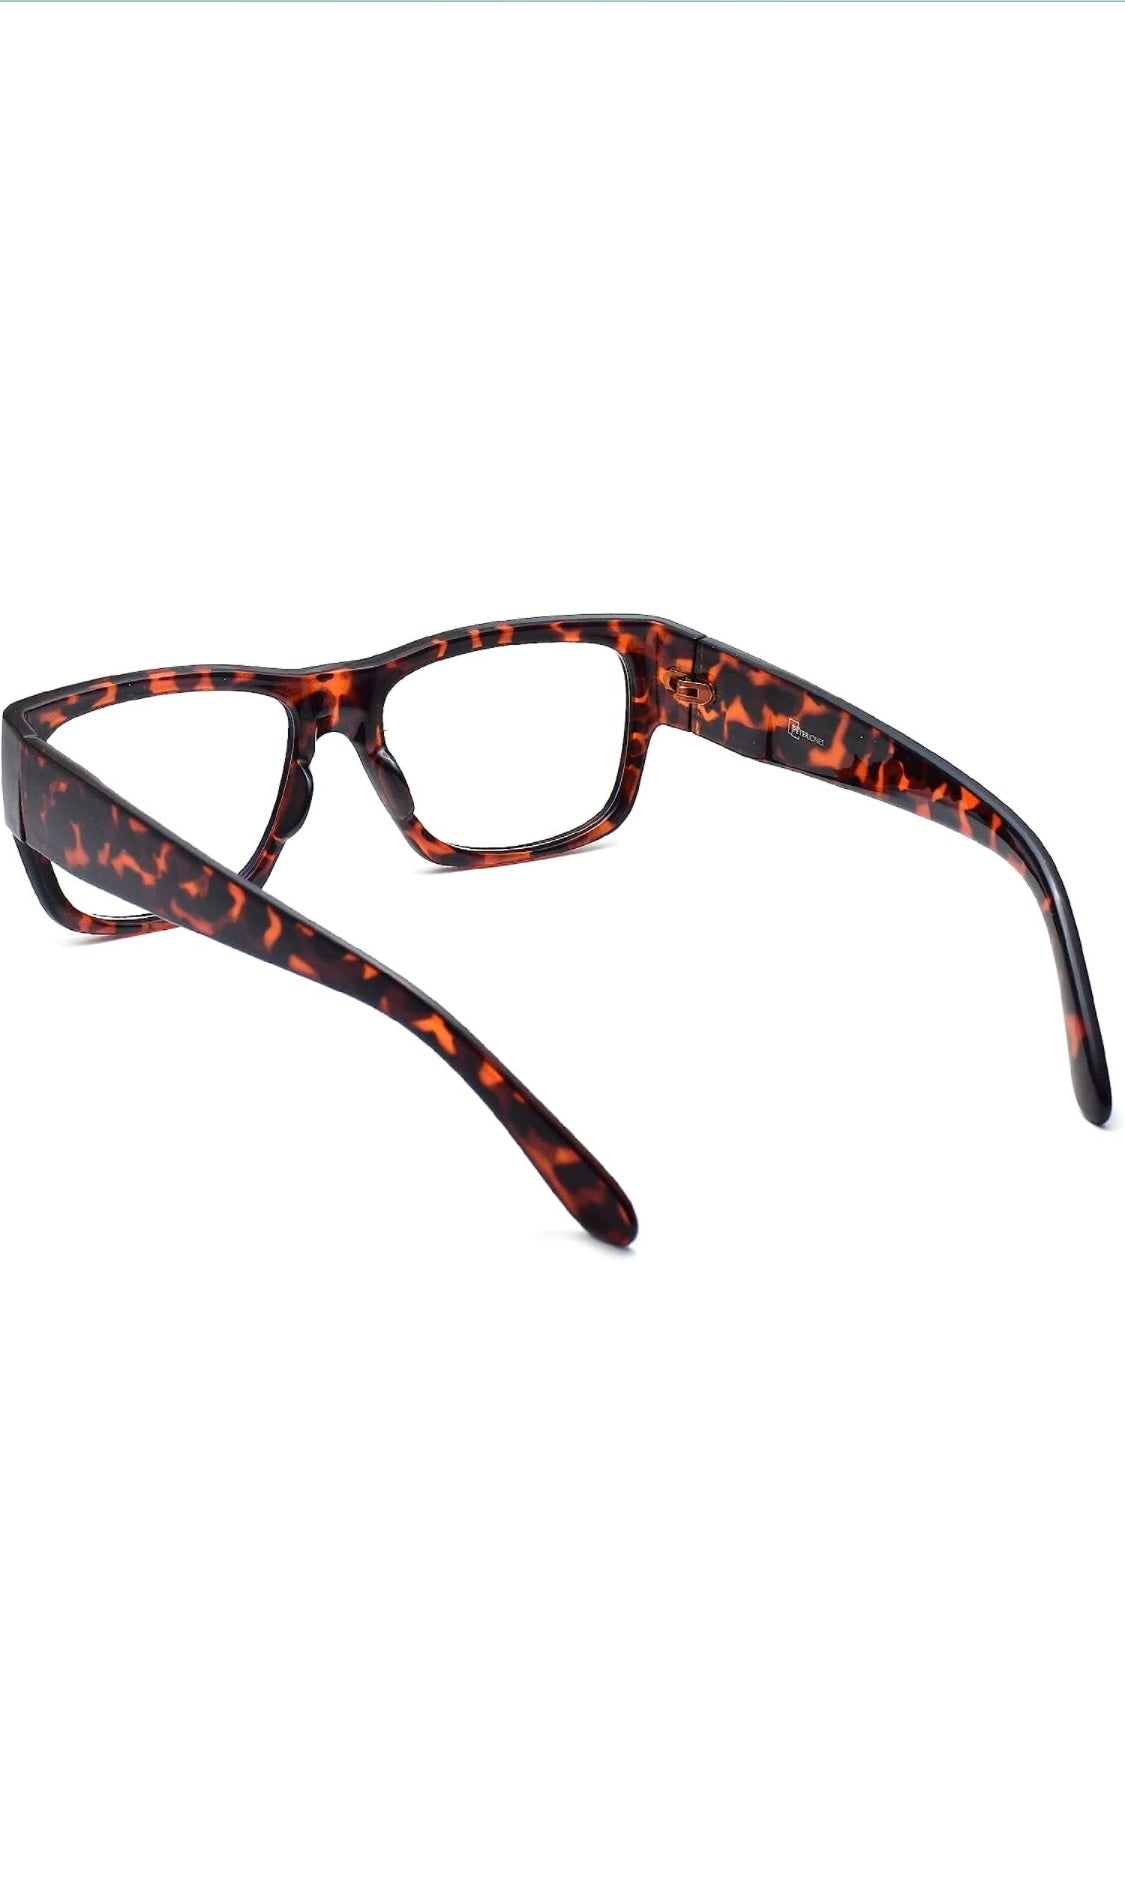 Jodykoes Thick Frame Unisex Anti Glare Eyeglasses Eyewear Spectacle (Leopard Print) - Jodykoes ®